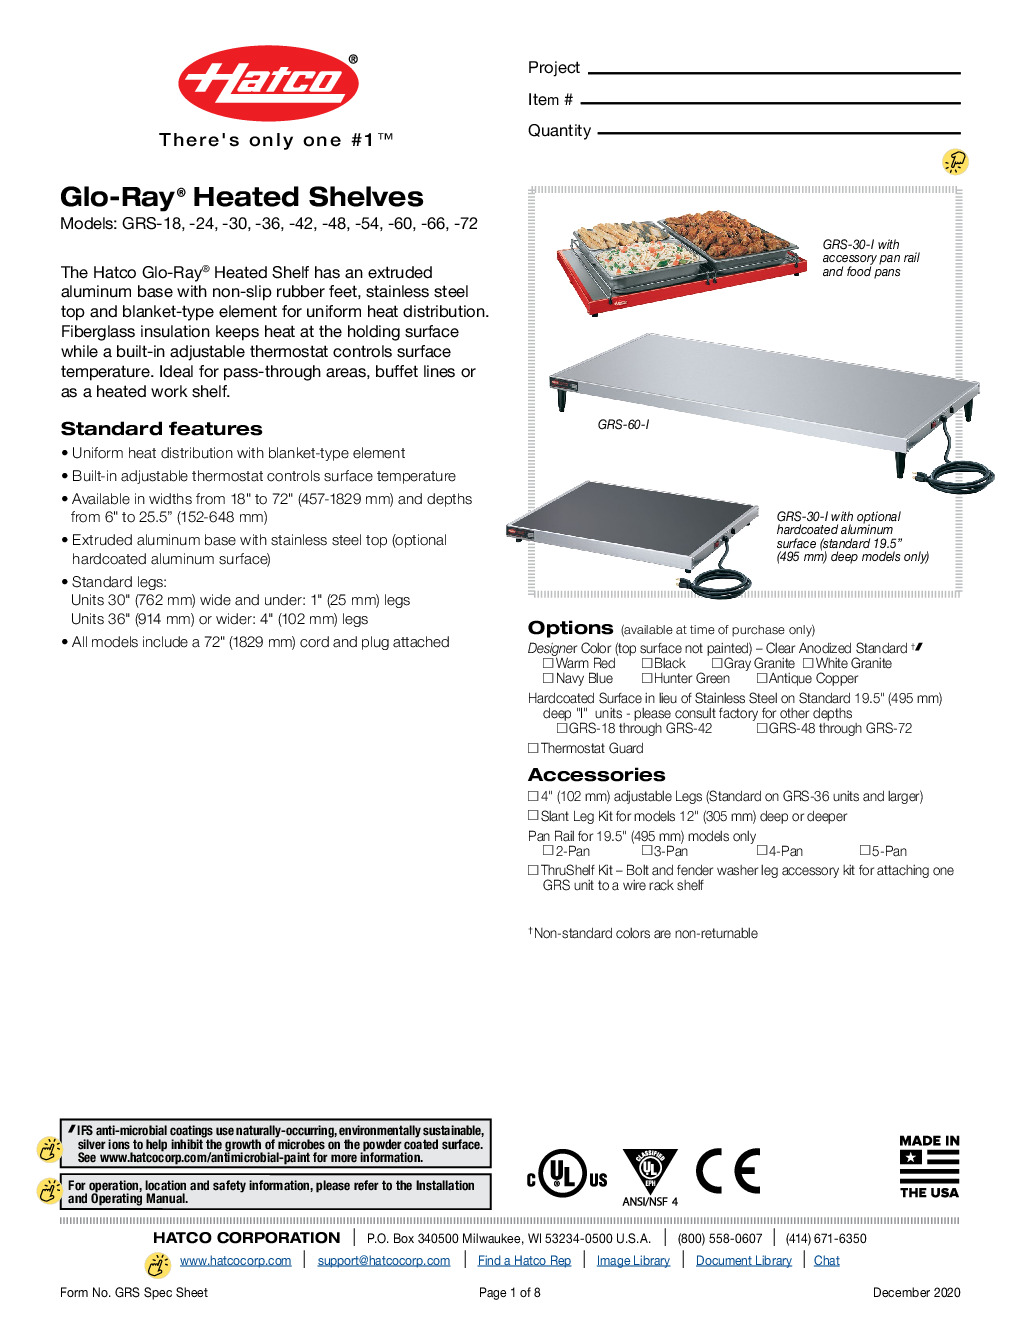 Hatco GRS-24 Glo-Ray Heated Shelves